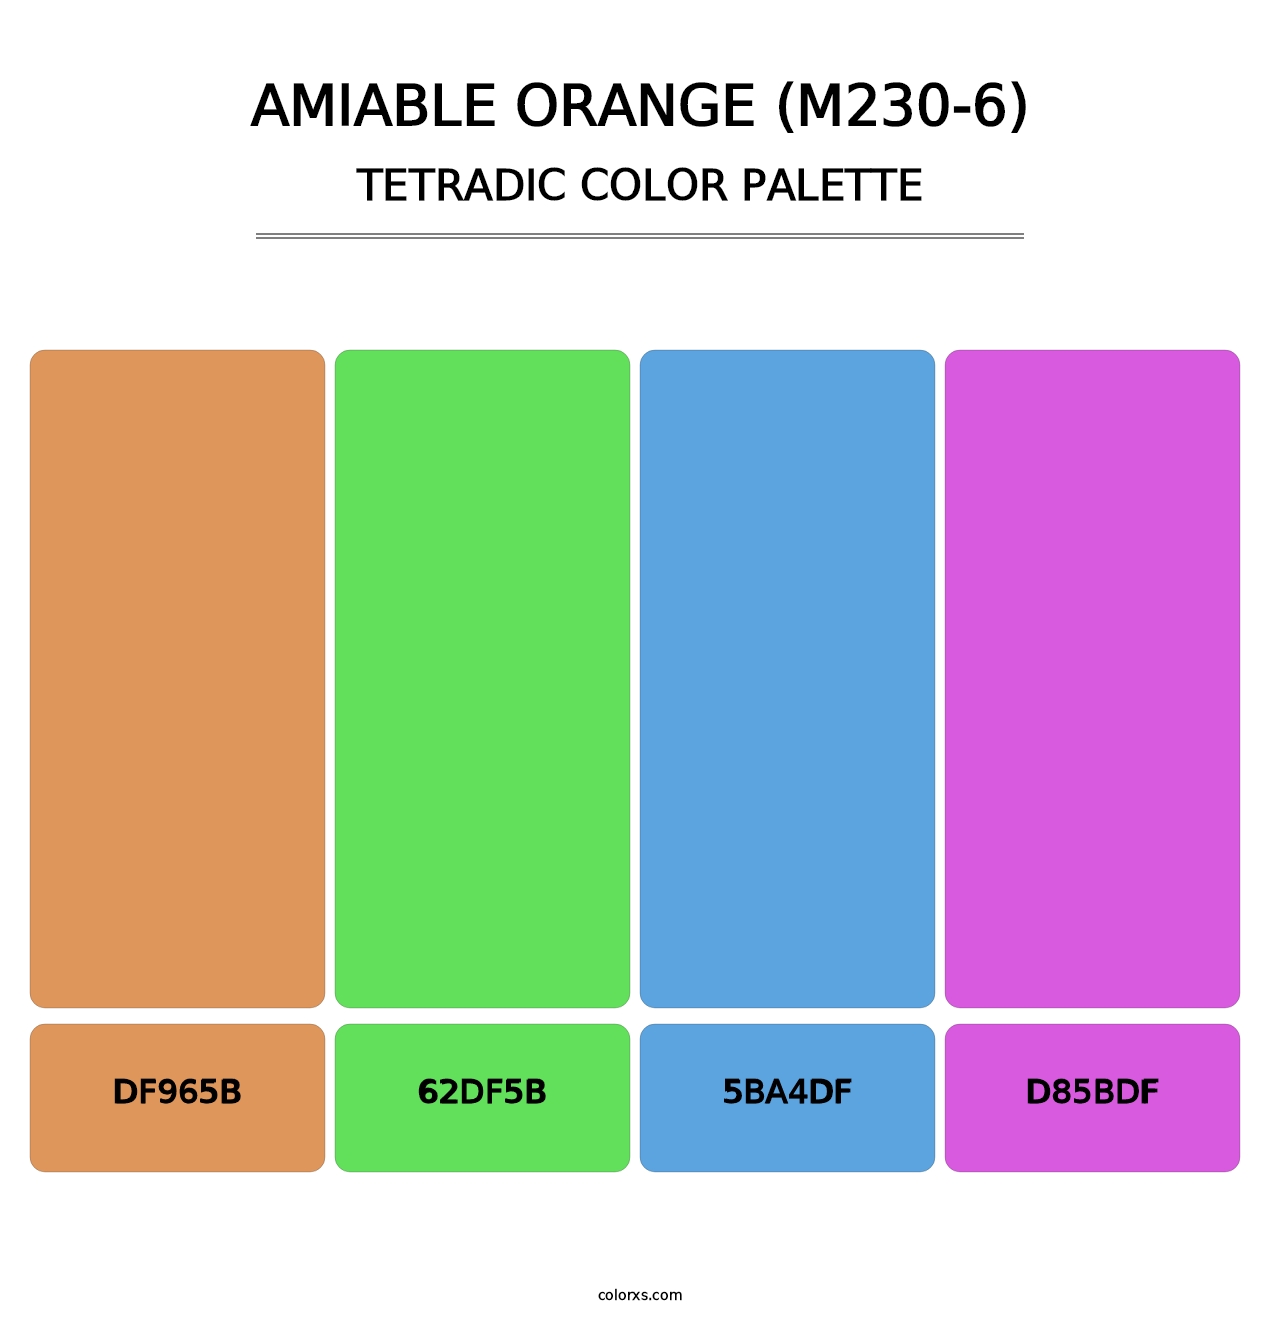 Amiable Orange (M230-6) - Tetradic Color Palette